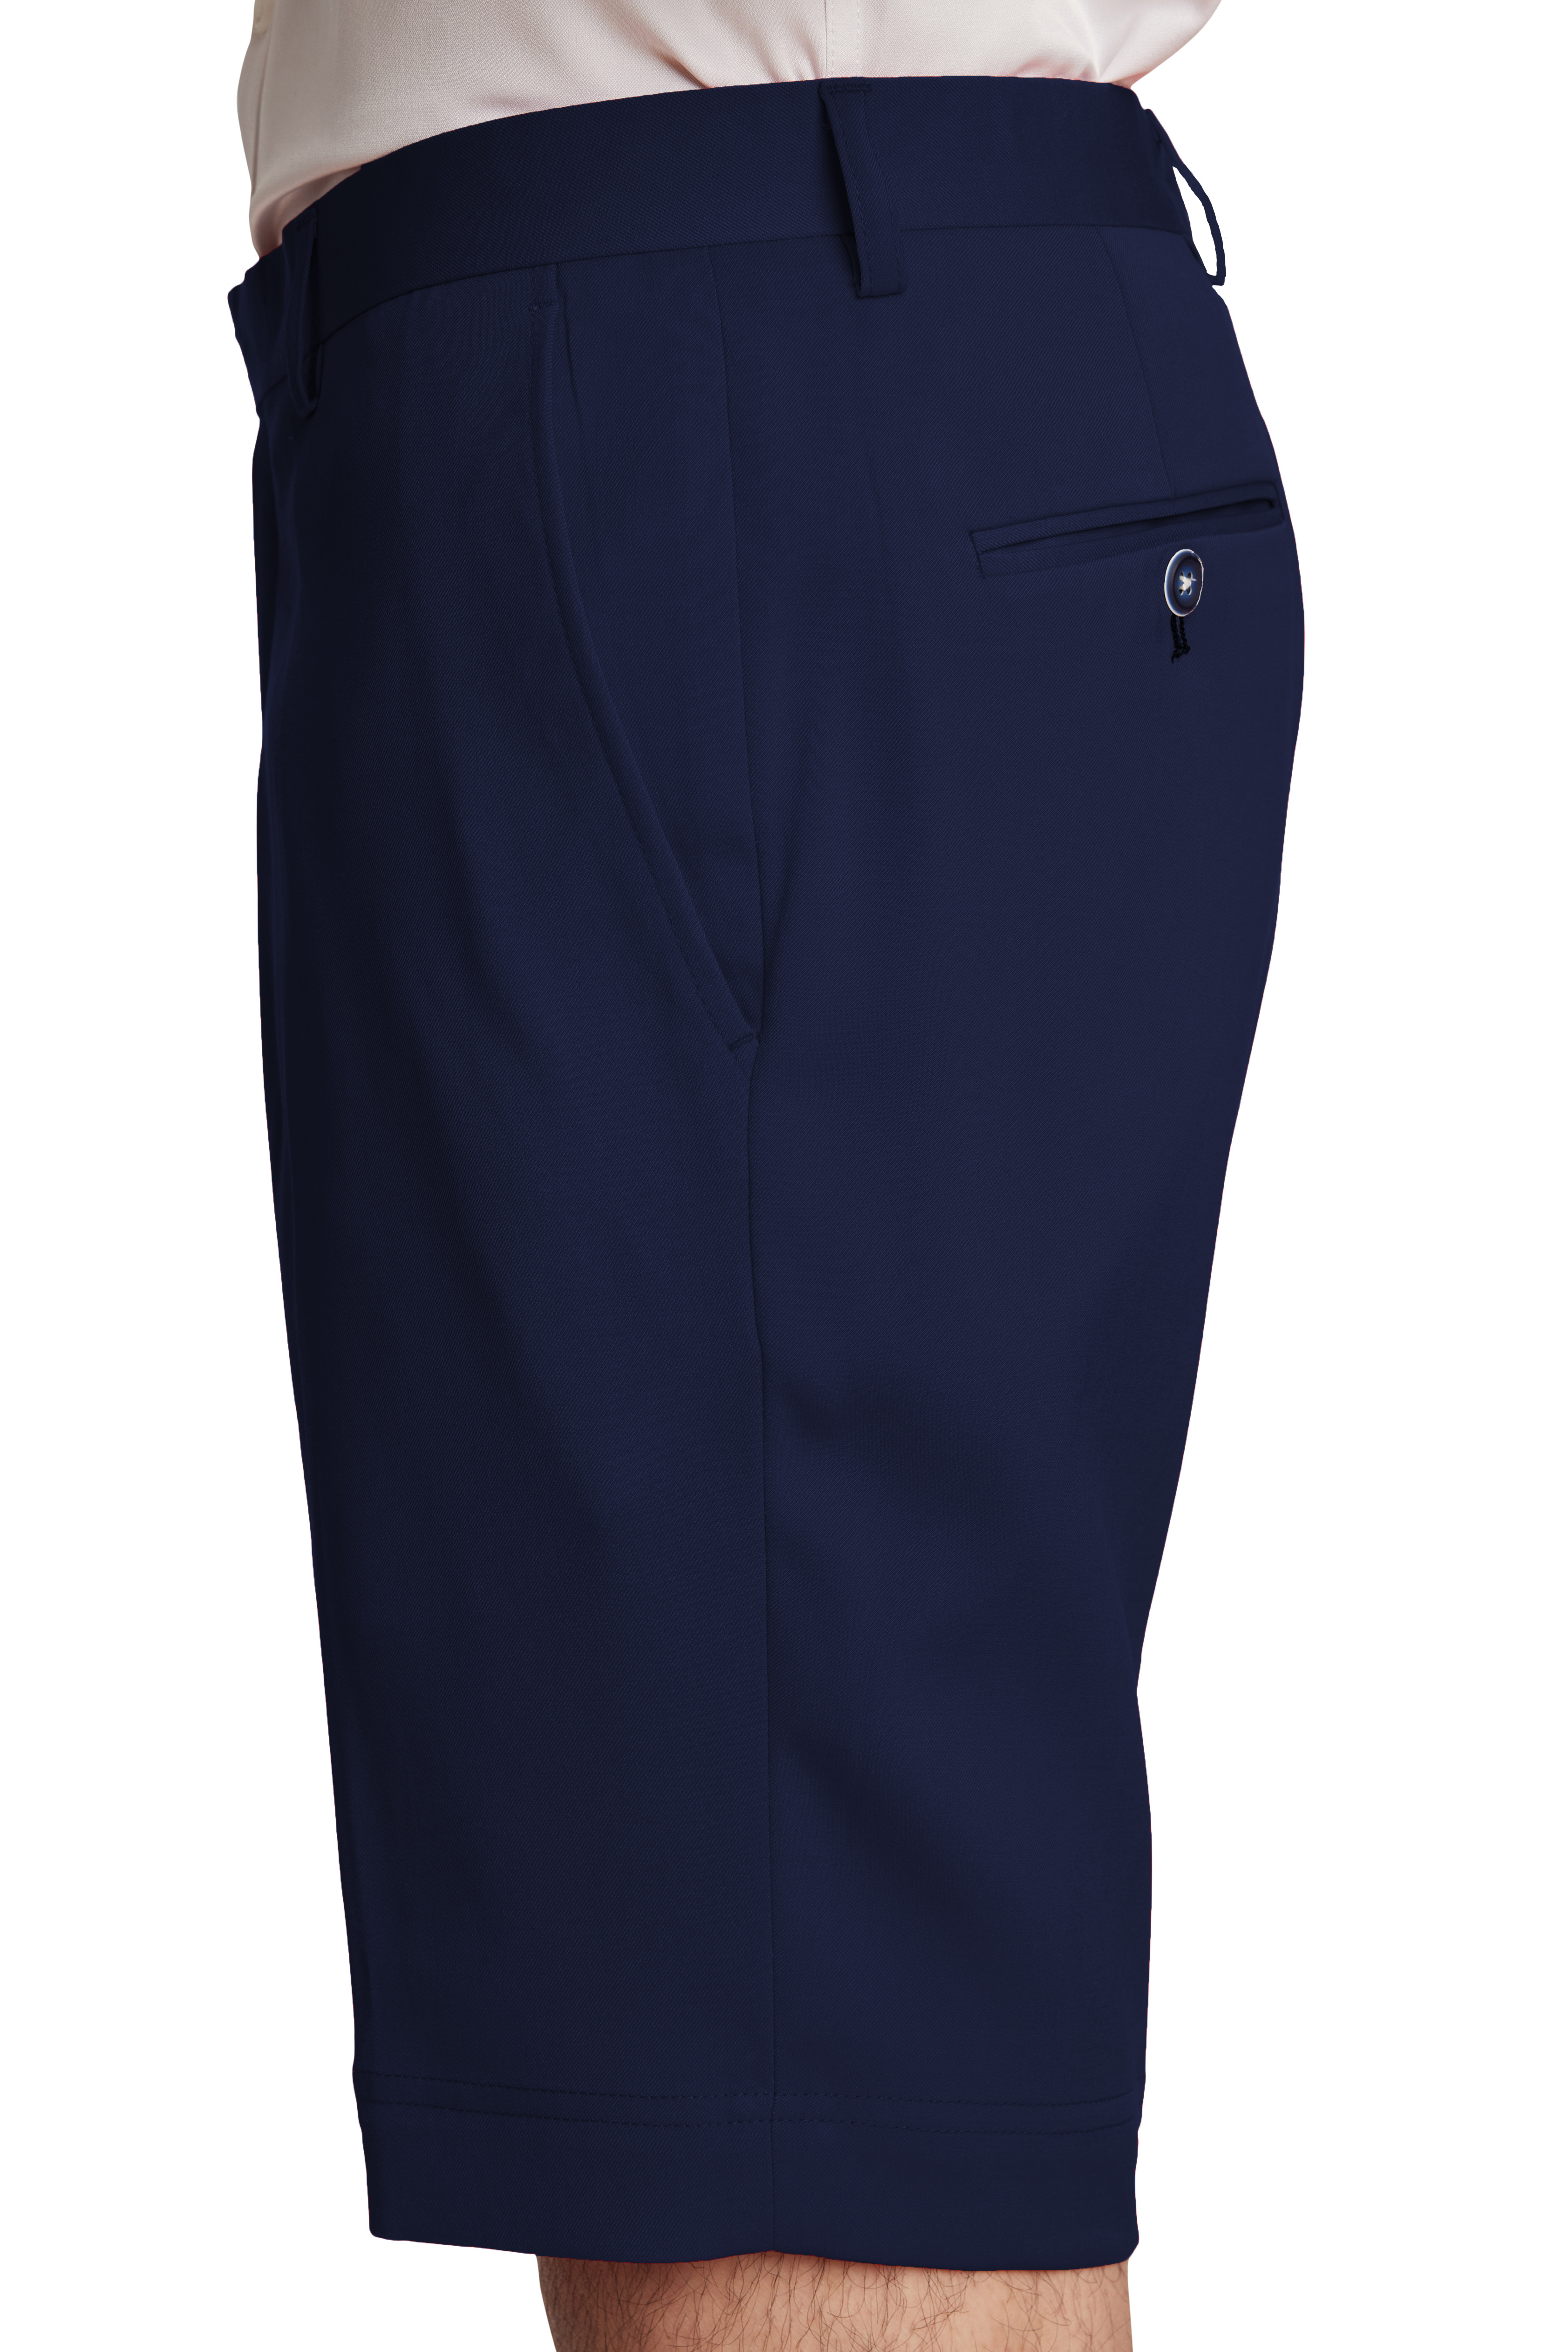 Fairview Shorts - slim - Navy